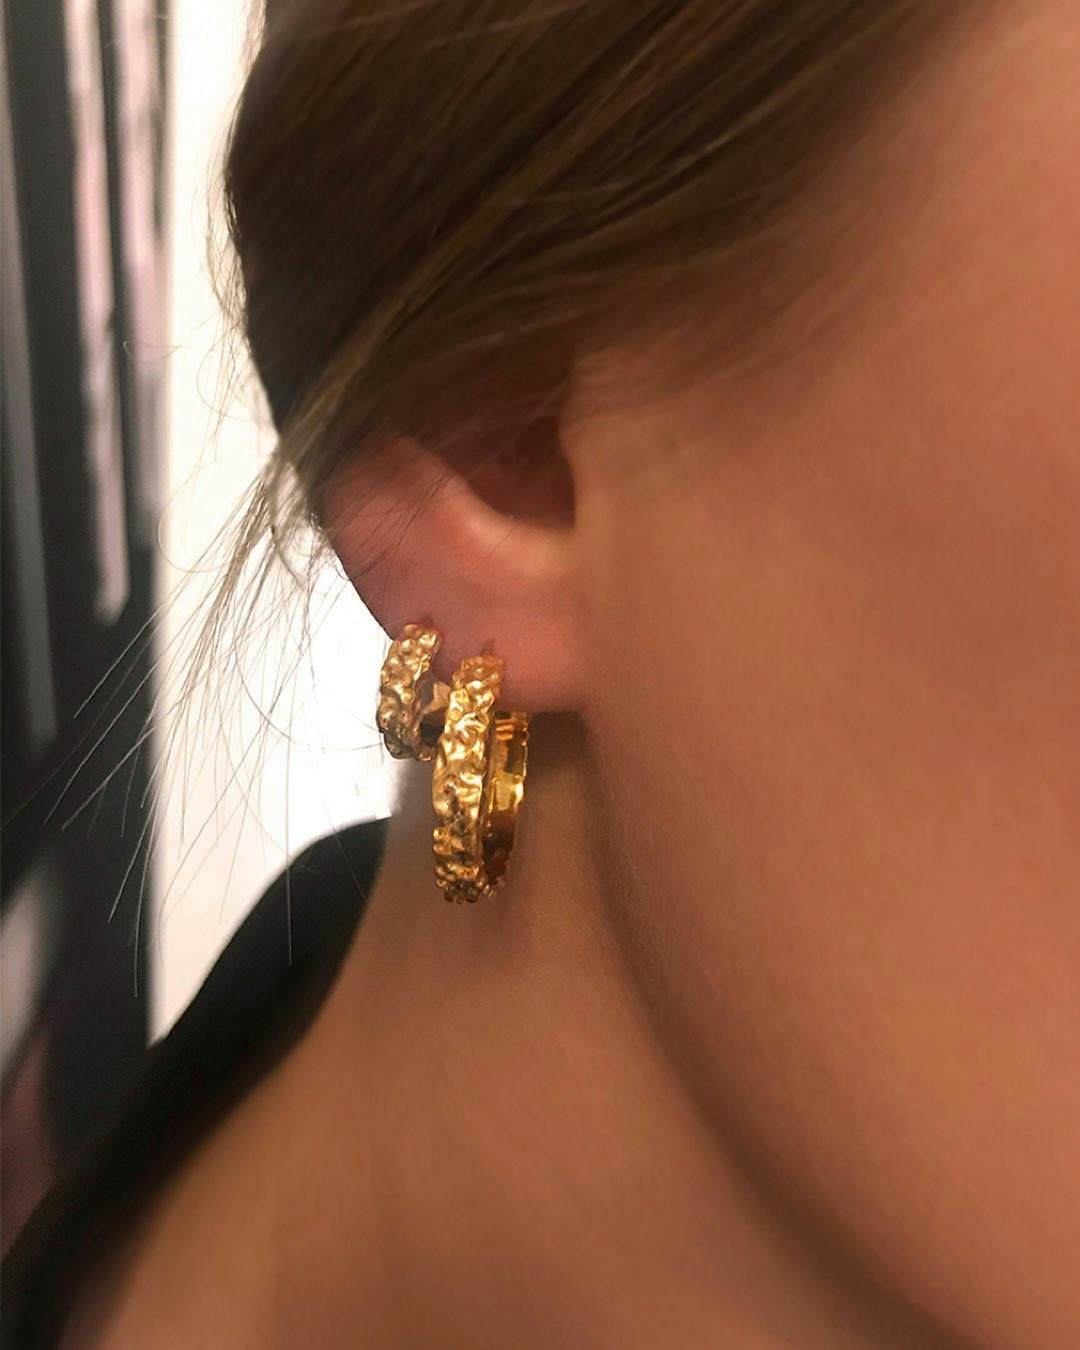 Aio Small earrings from Maanesten in Silver Sterling 925